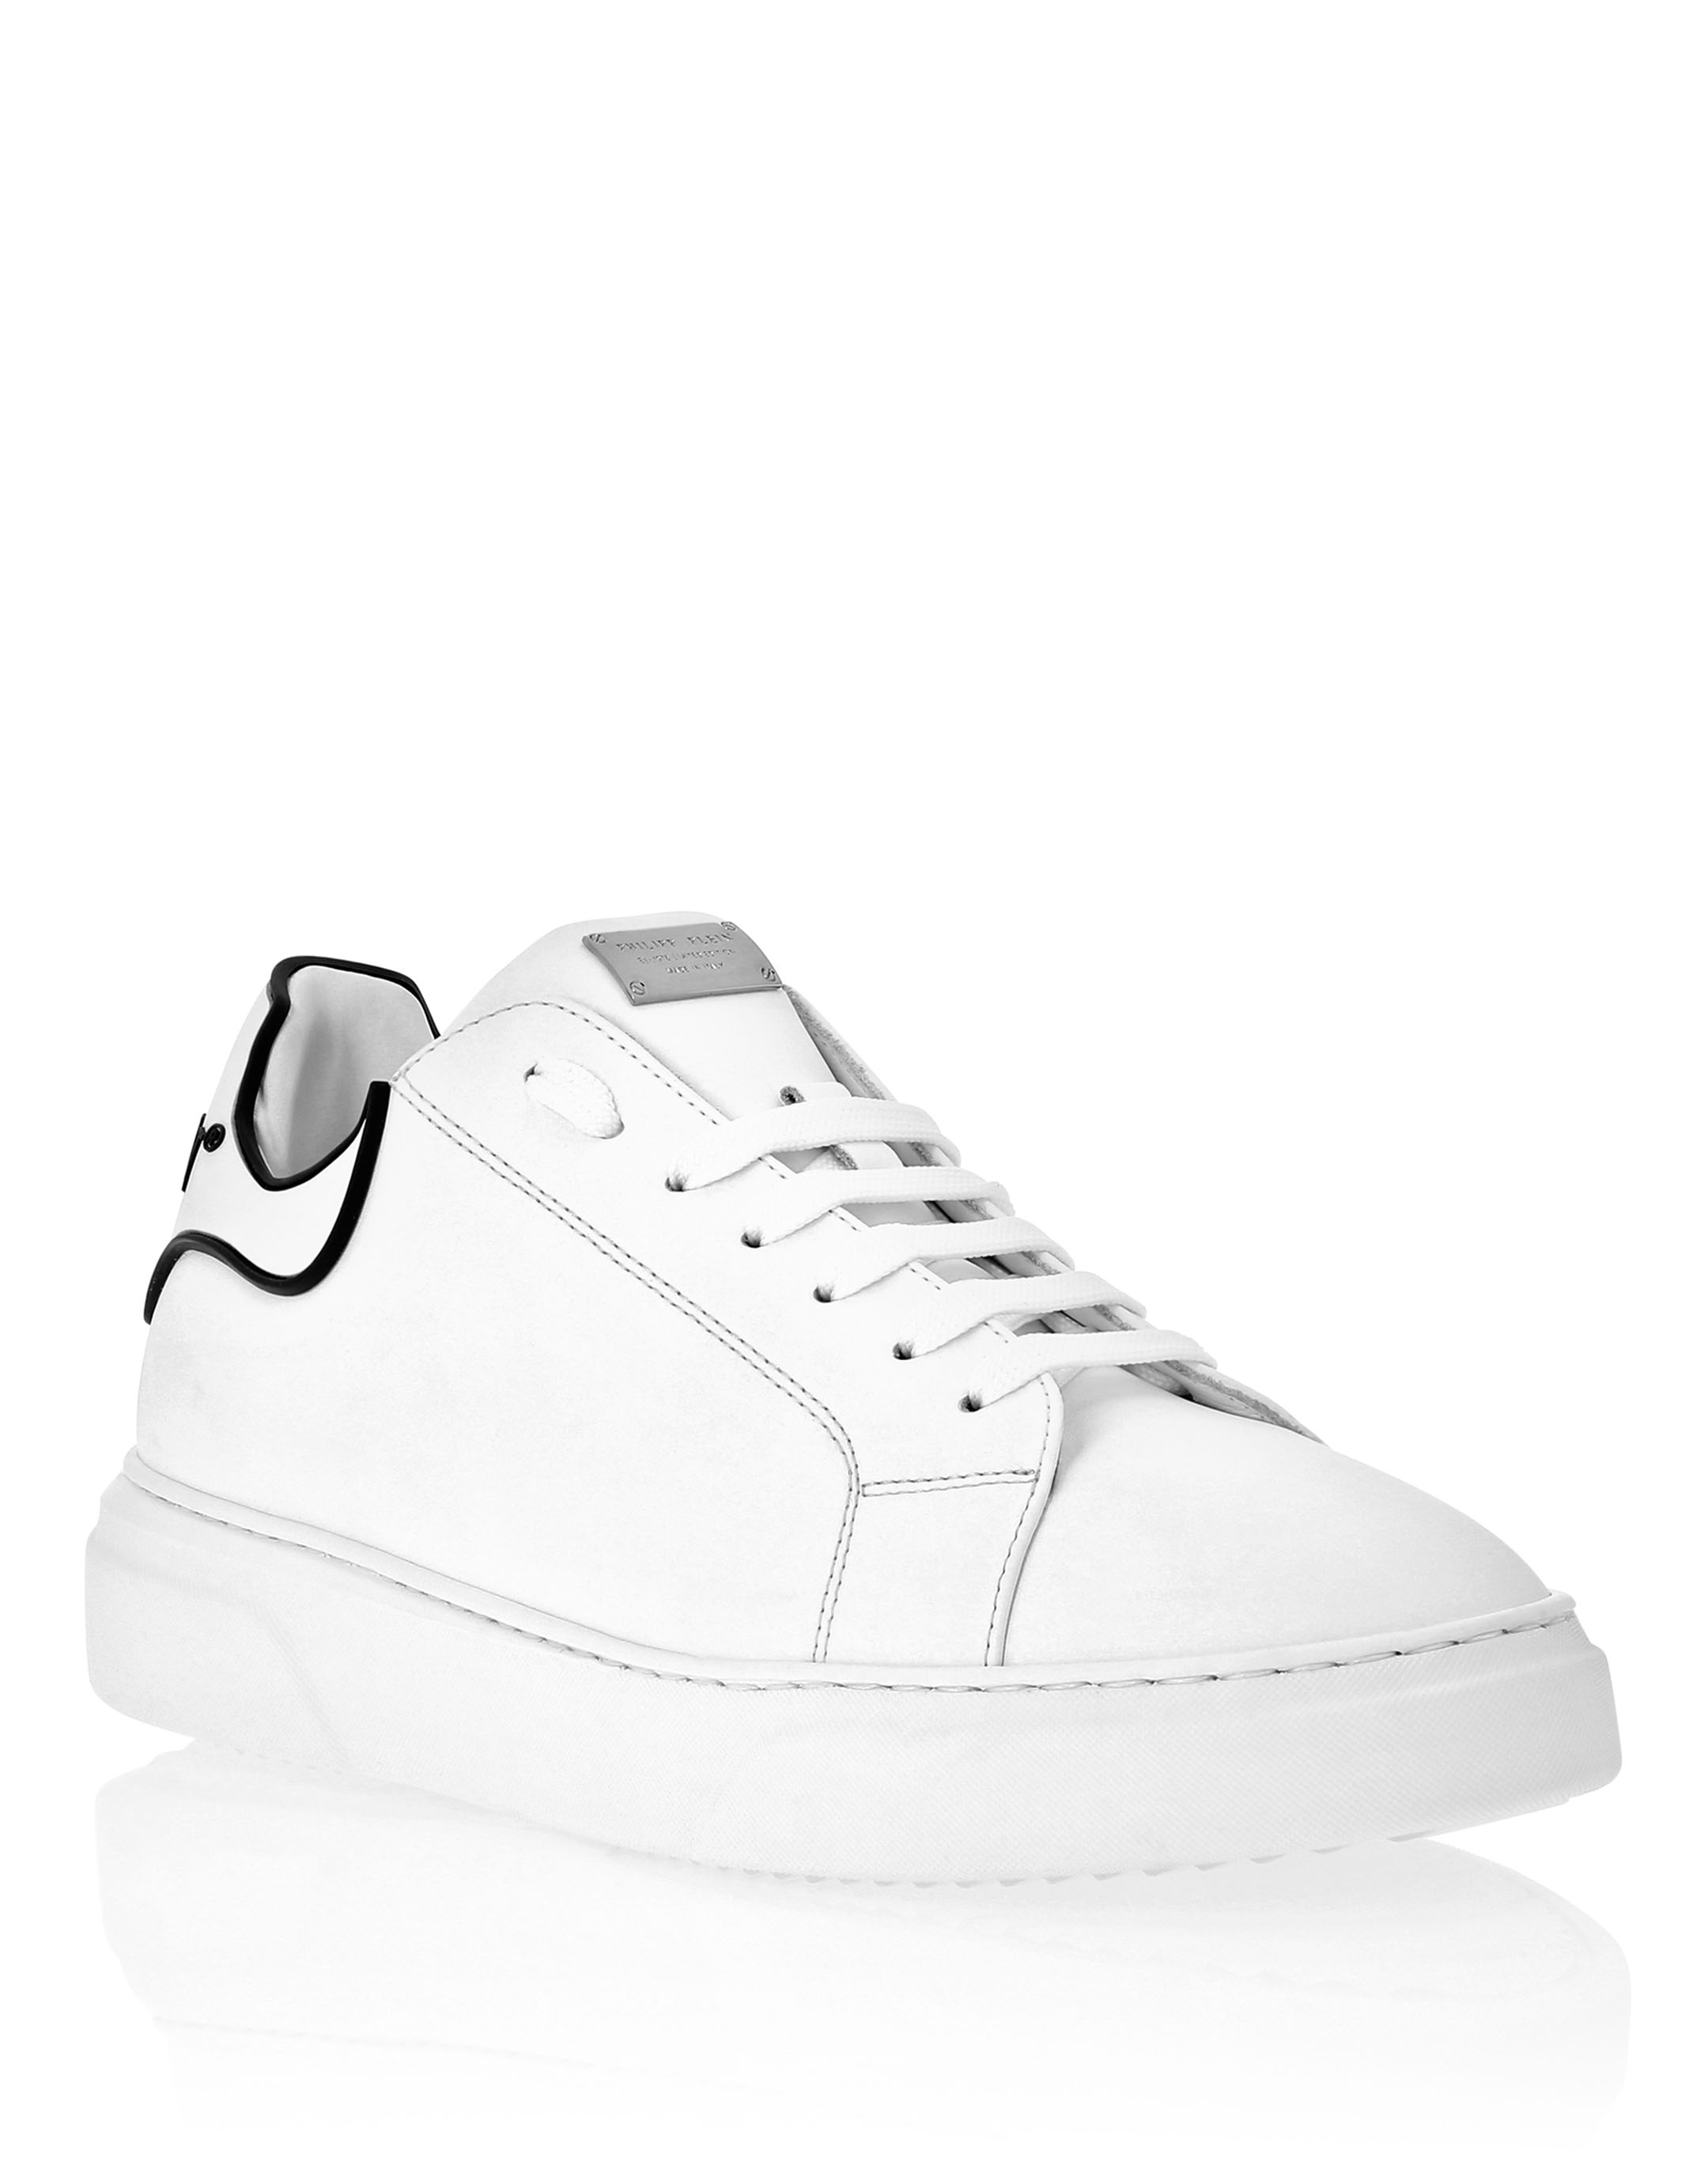 Hawee Teens White Canvas Sneaker From Little Kids to Big Kids - Walmart.com